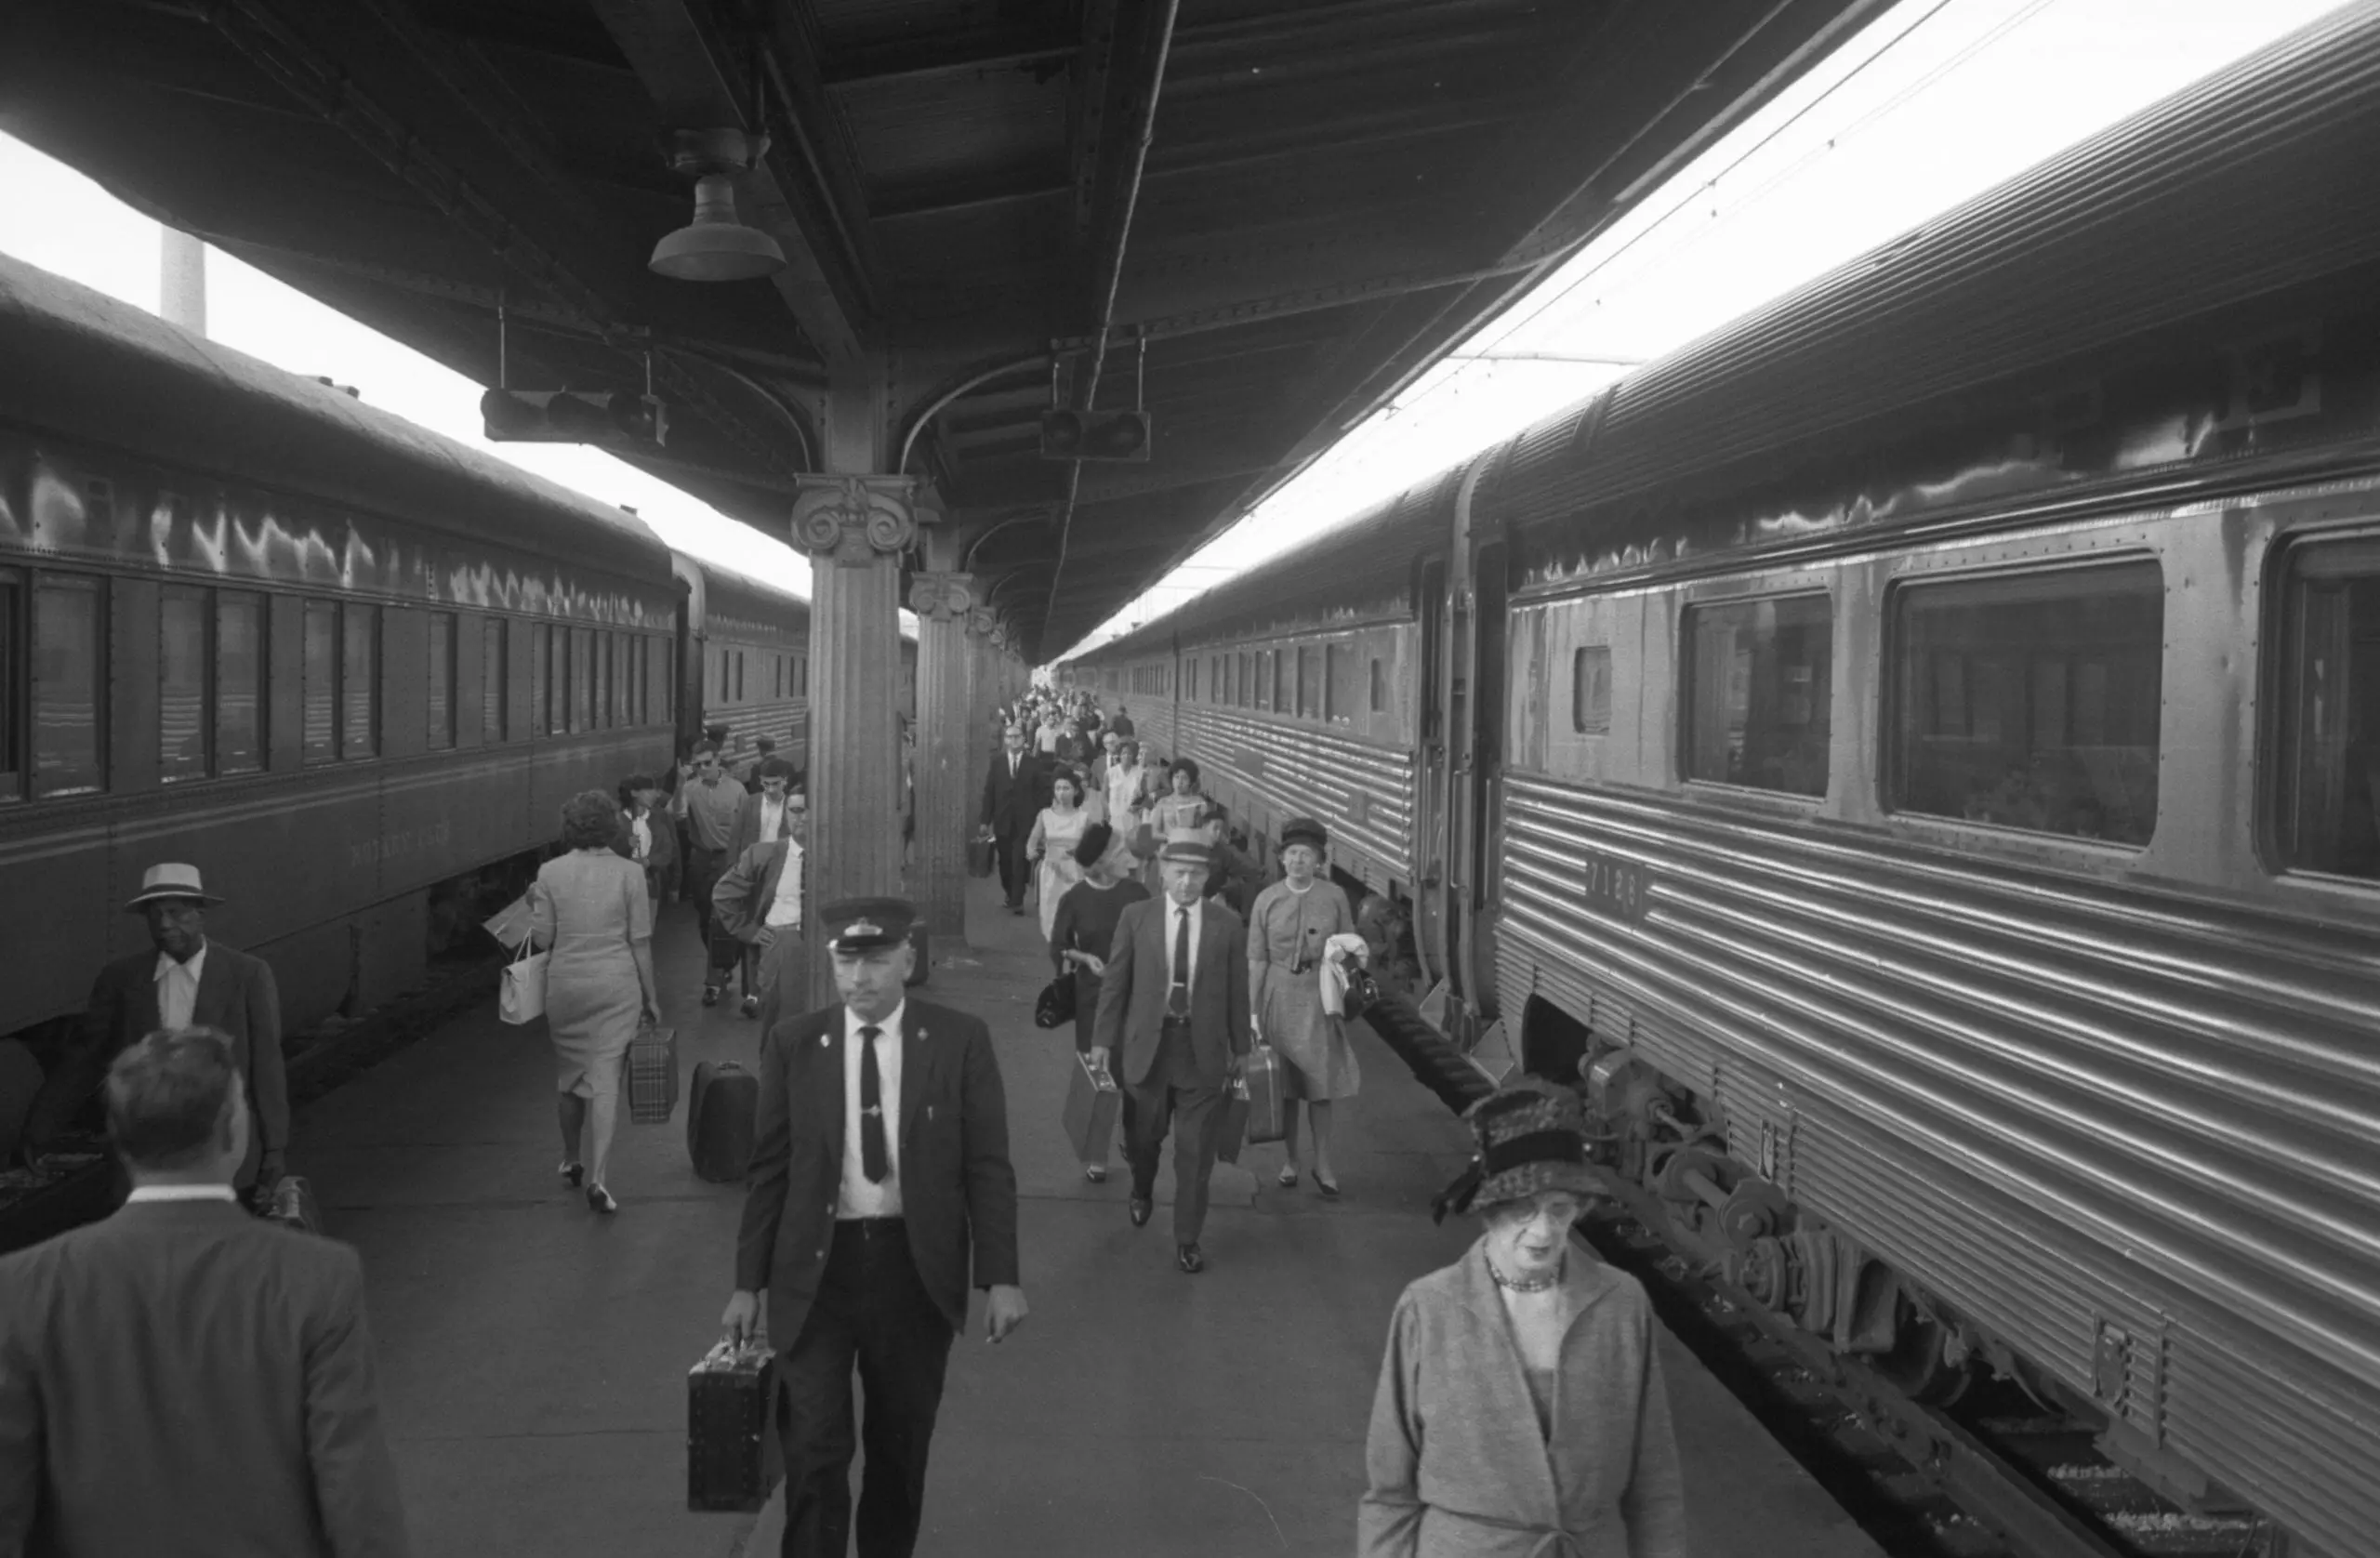 Passengers and train employees walking near trains, Union Station, Washington, D.C.